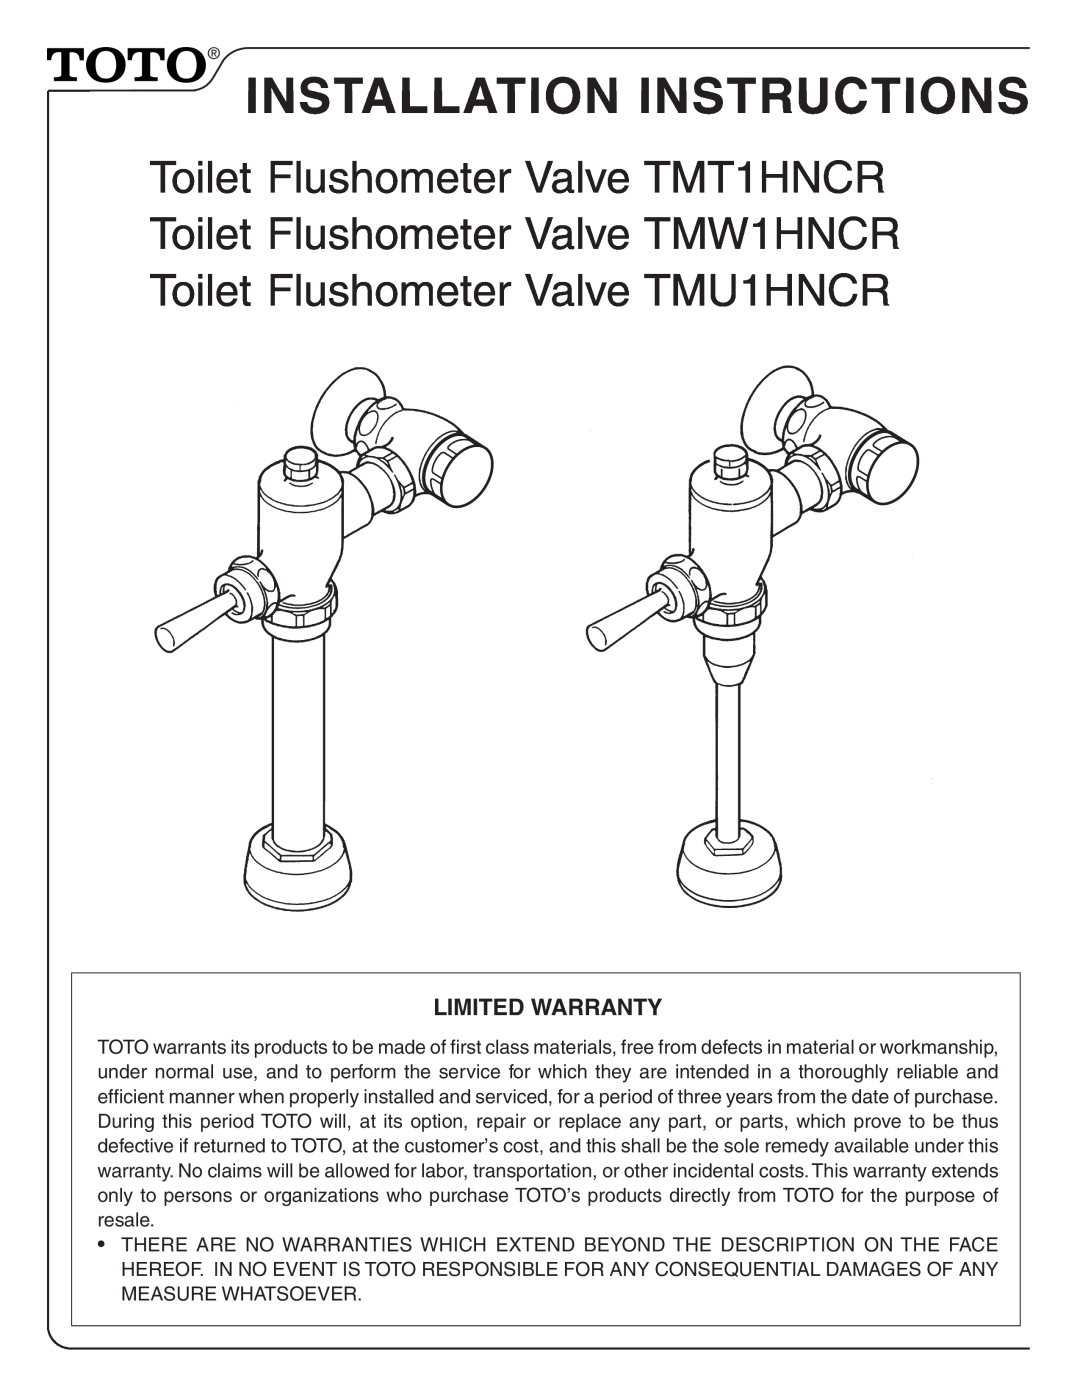 Toto installation instructions Installation Instructions, Toilet Flushometer Valve TMT1HNCR, Limited Warranty 